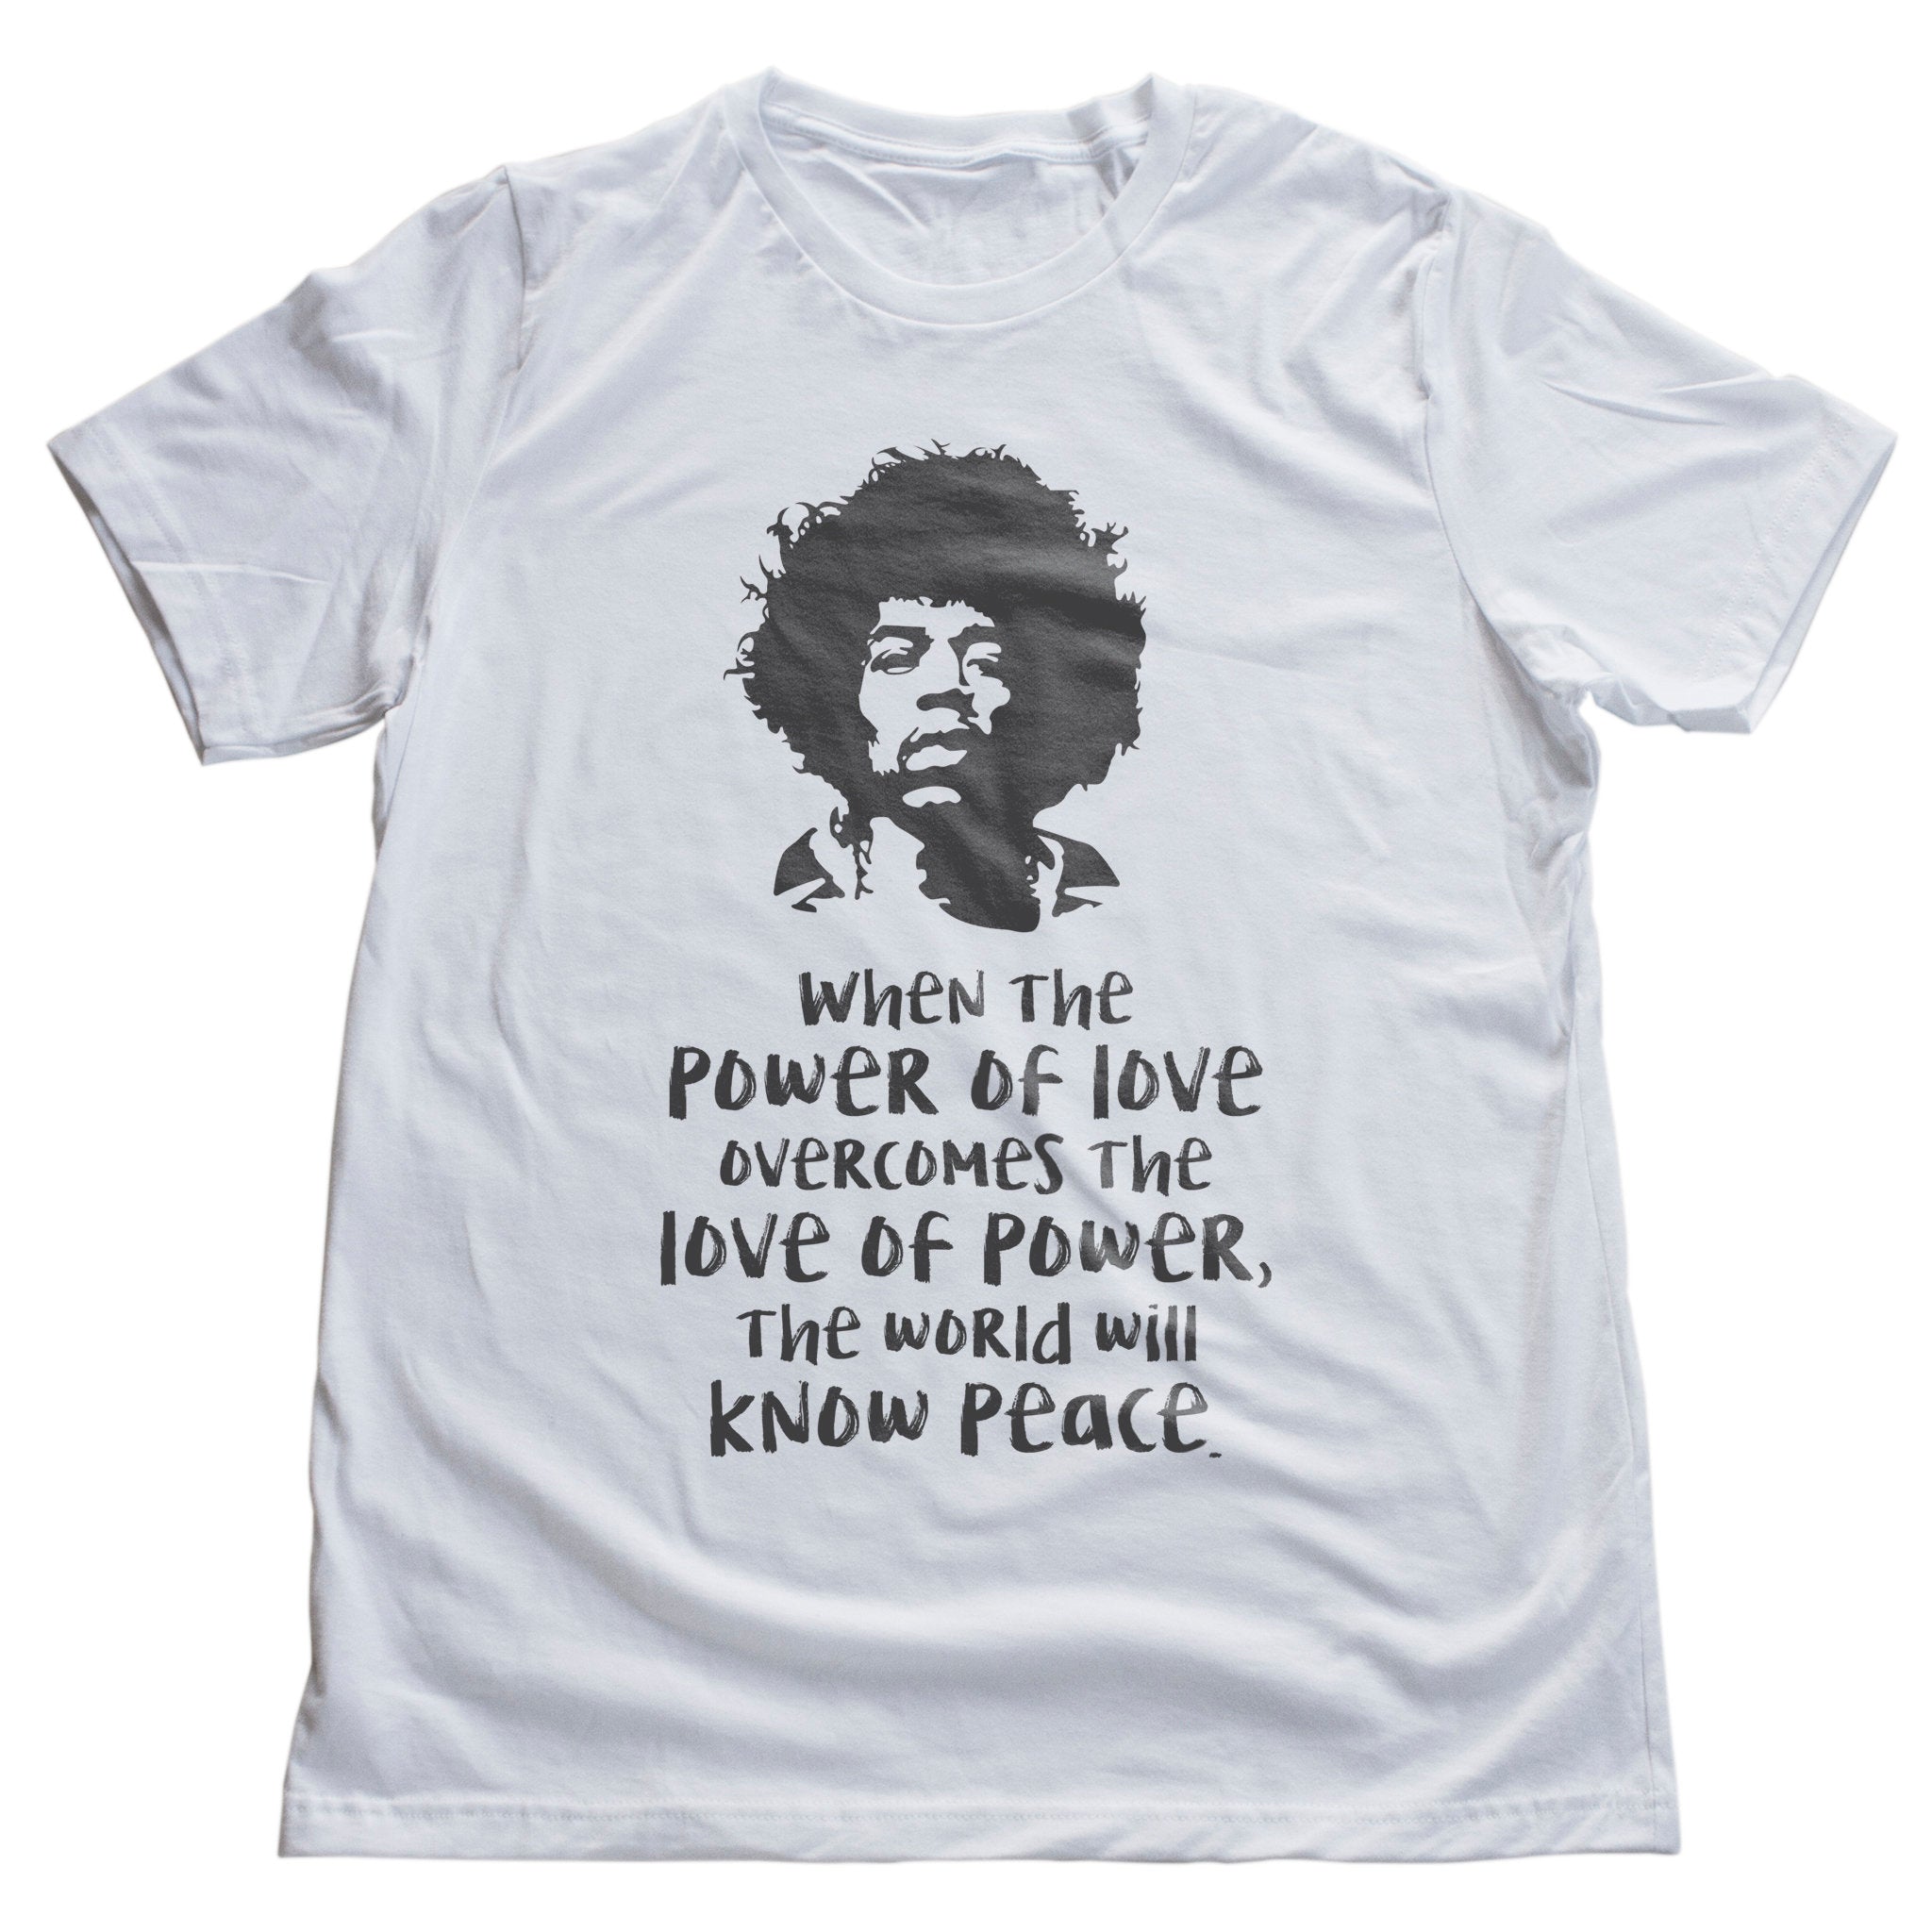 The Power of LOVE — Jimi Hendrix quote / Retro Unisex T-Shirt